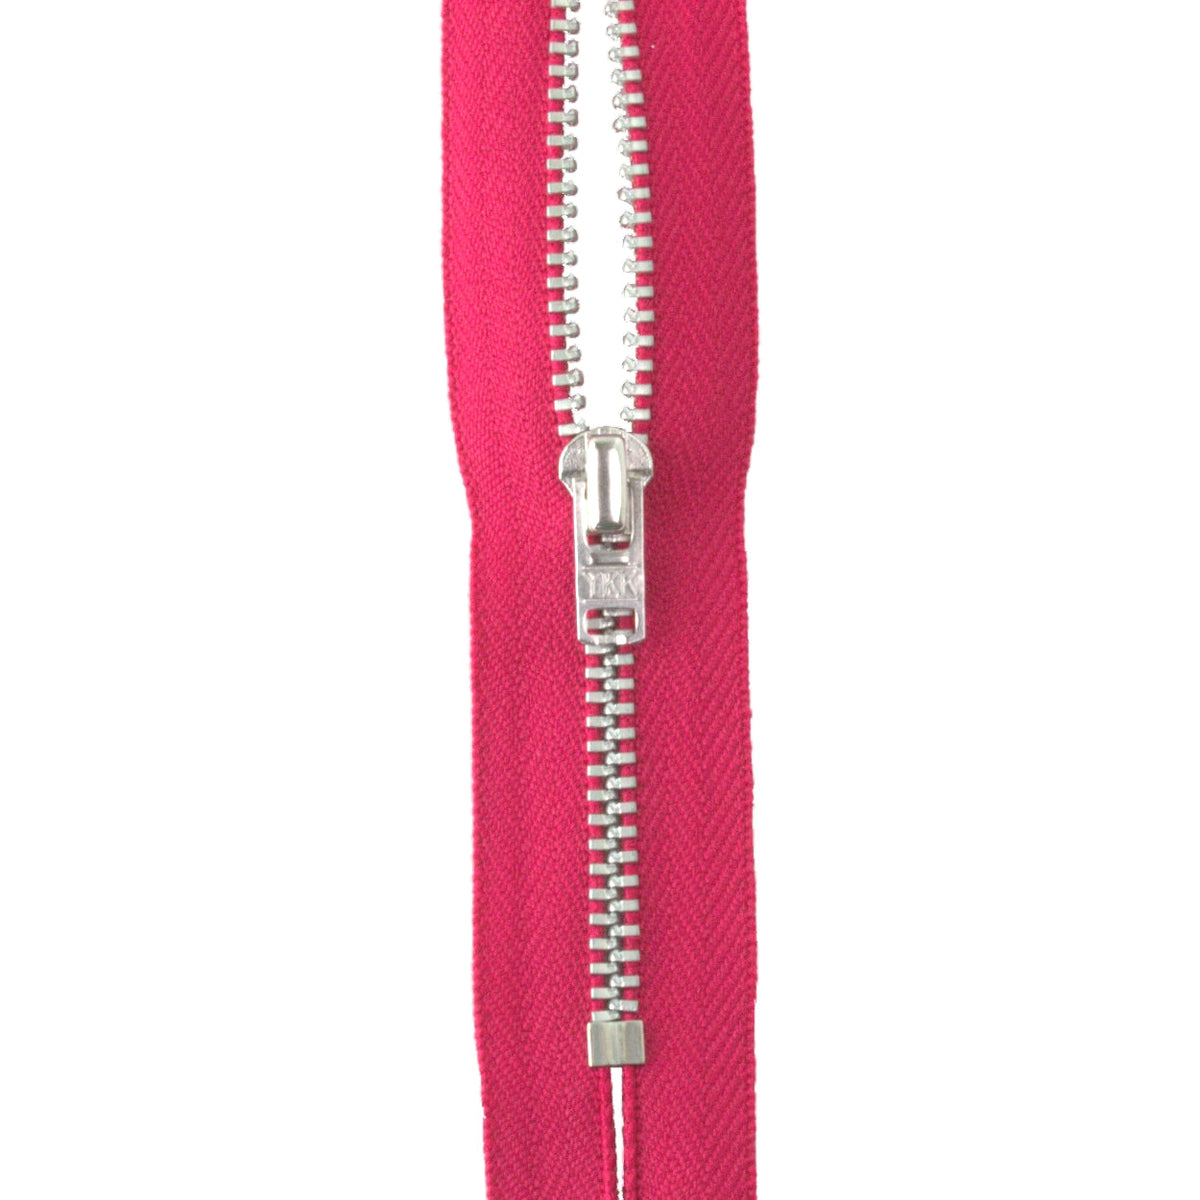 YKK silver tooth Metal Dress Zips - Fuchsia Pink